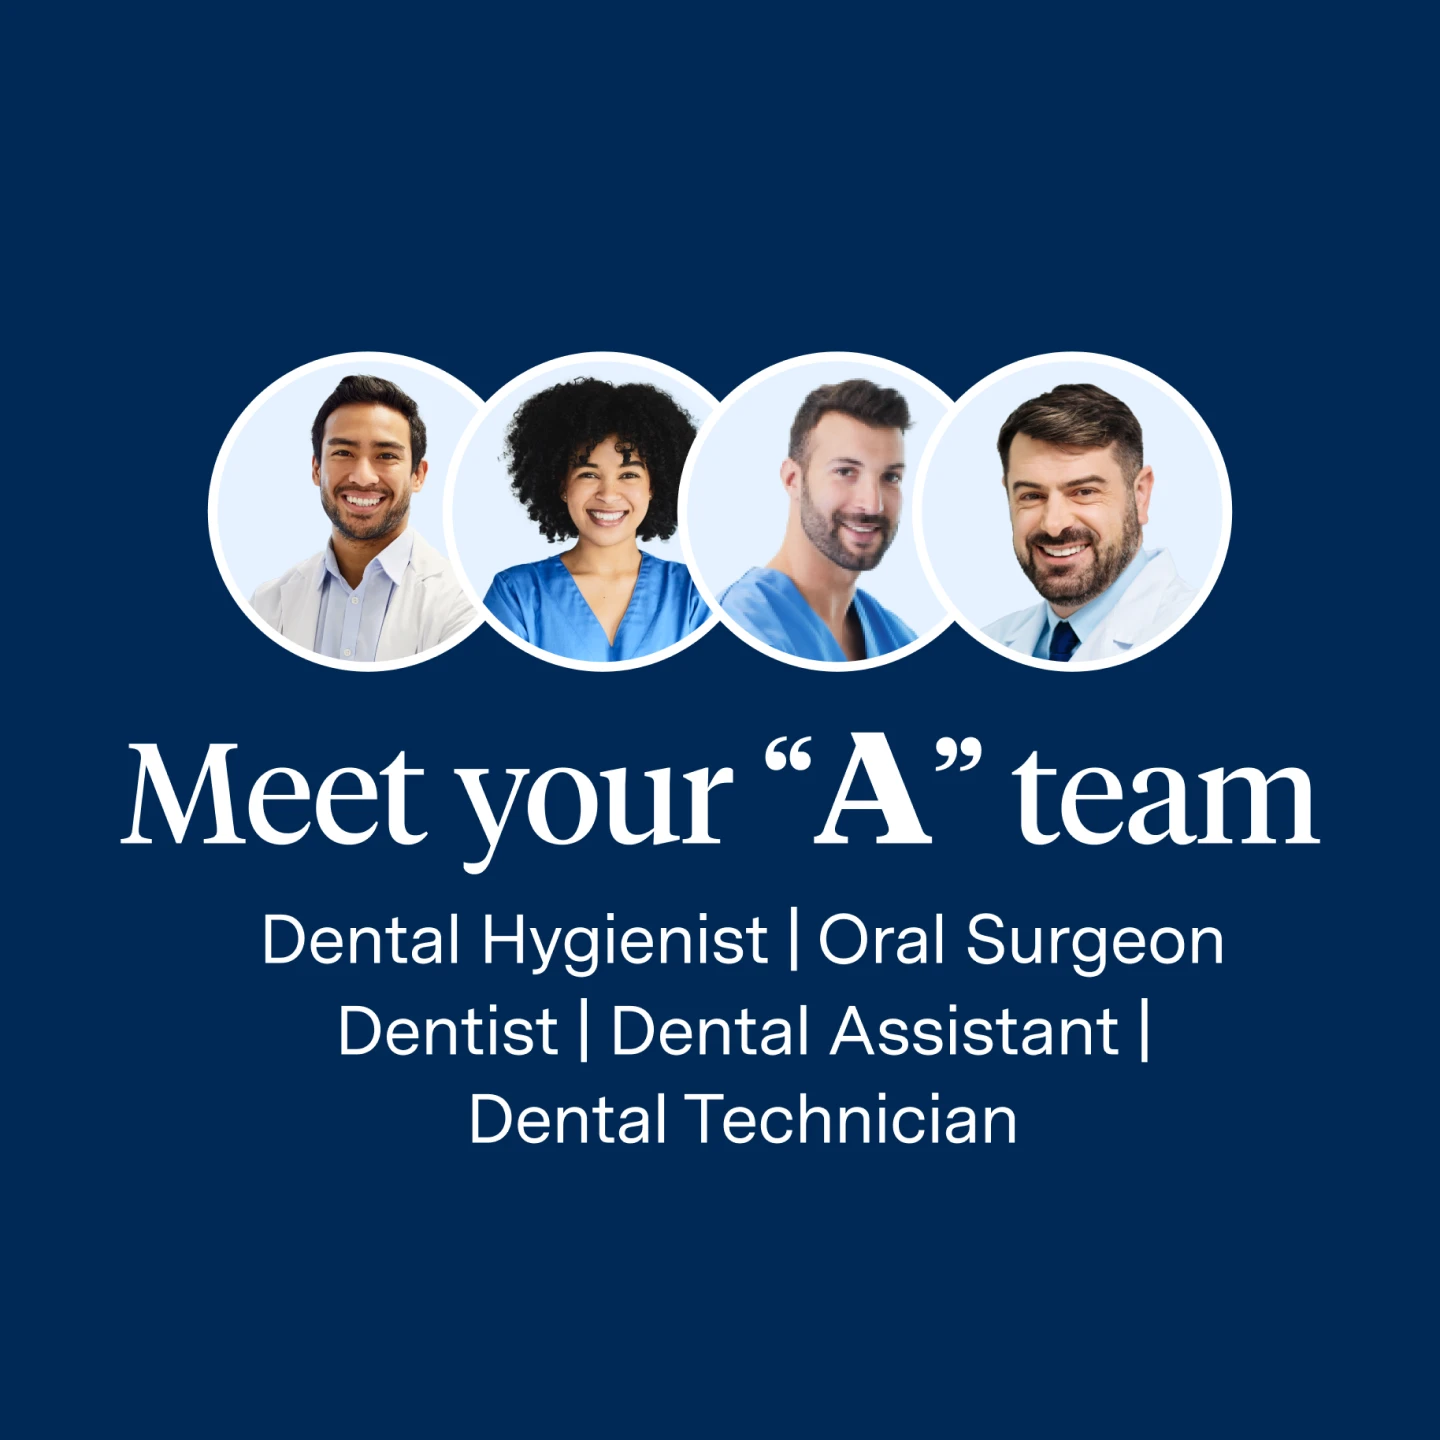 Meet your "A" team. Dental hygienist, oral surgeon, dentist, dental assistant, dental technician.